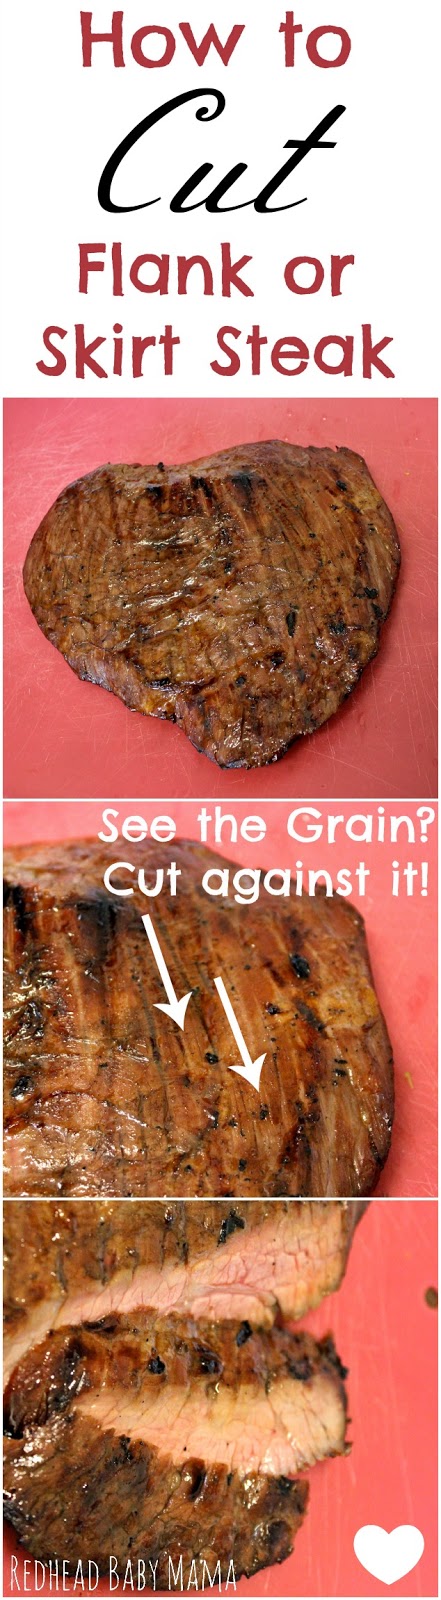 Learn how to cut flank steak or skirt steak. Cut against the grain and it's tasty!